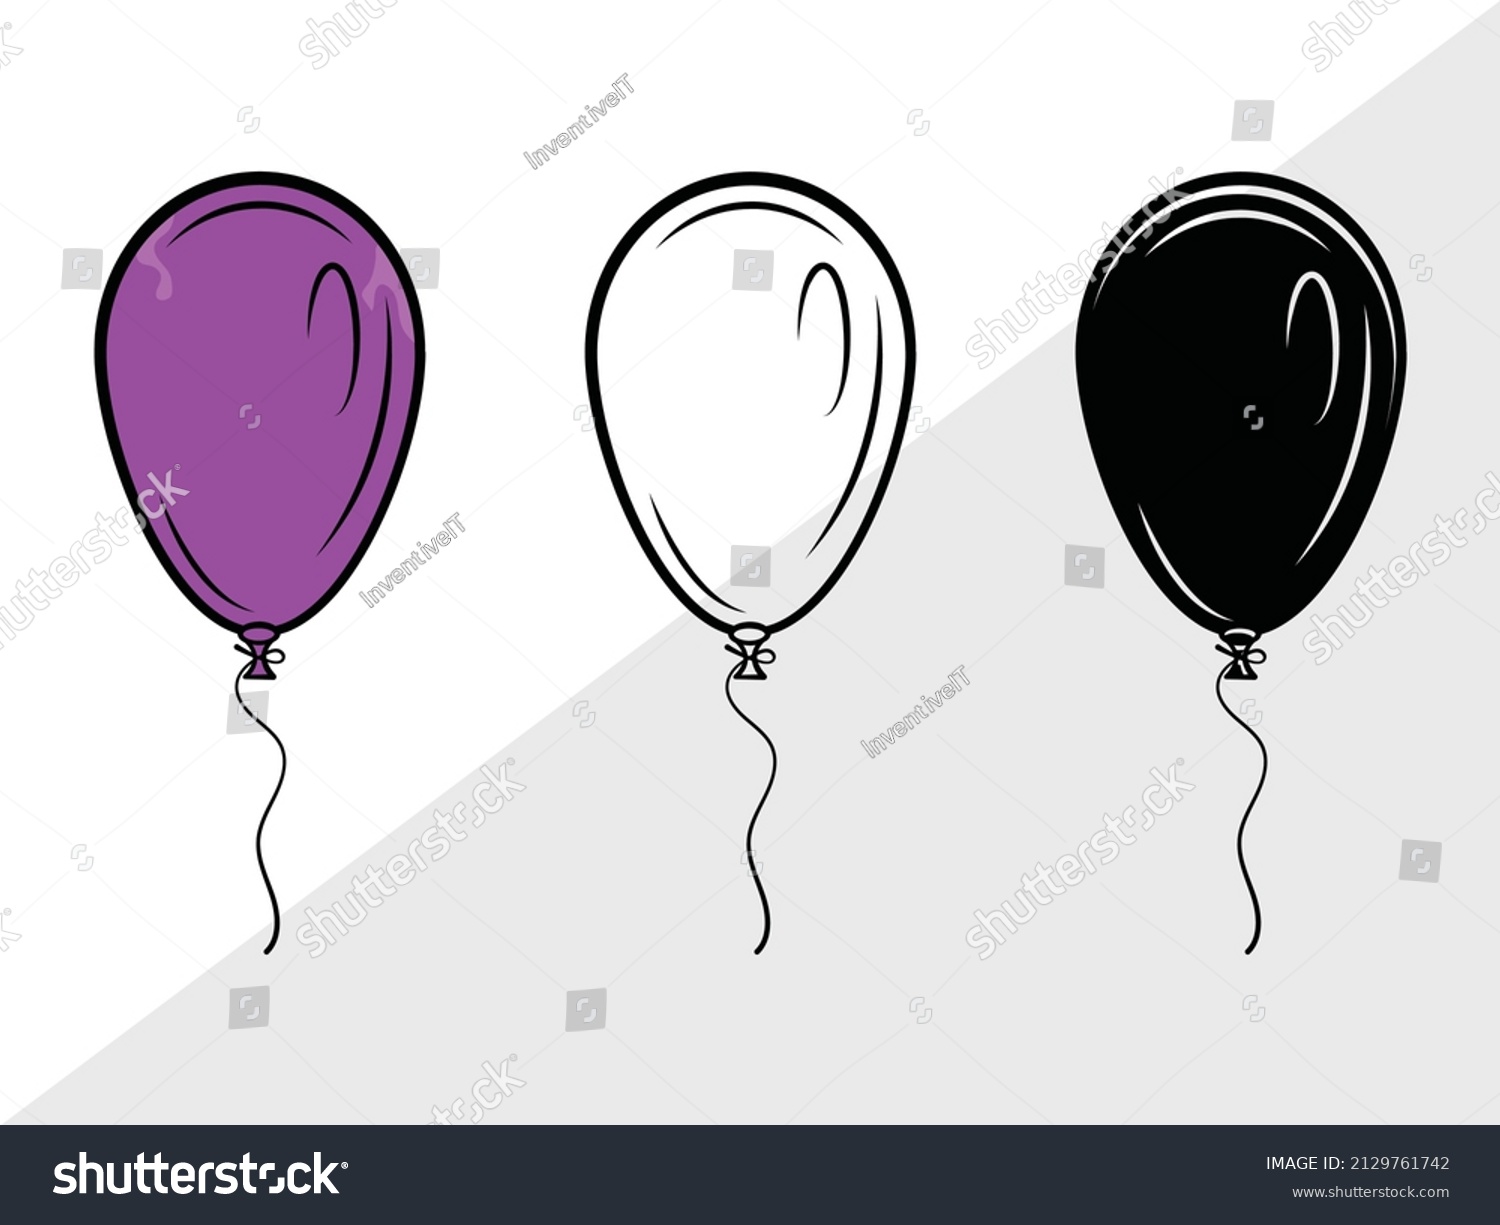 SVG of Balloon clipart Printable Vector Illustration svg